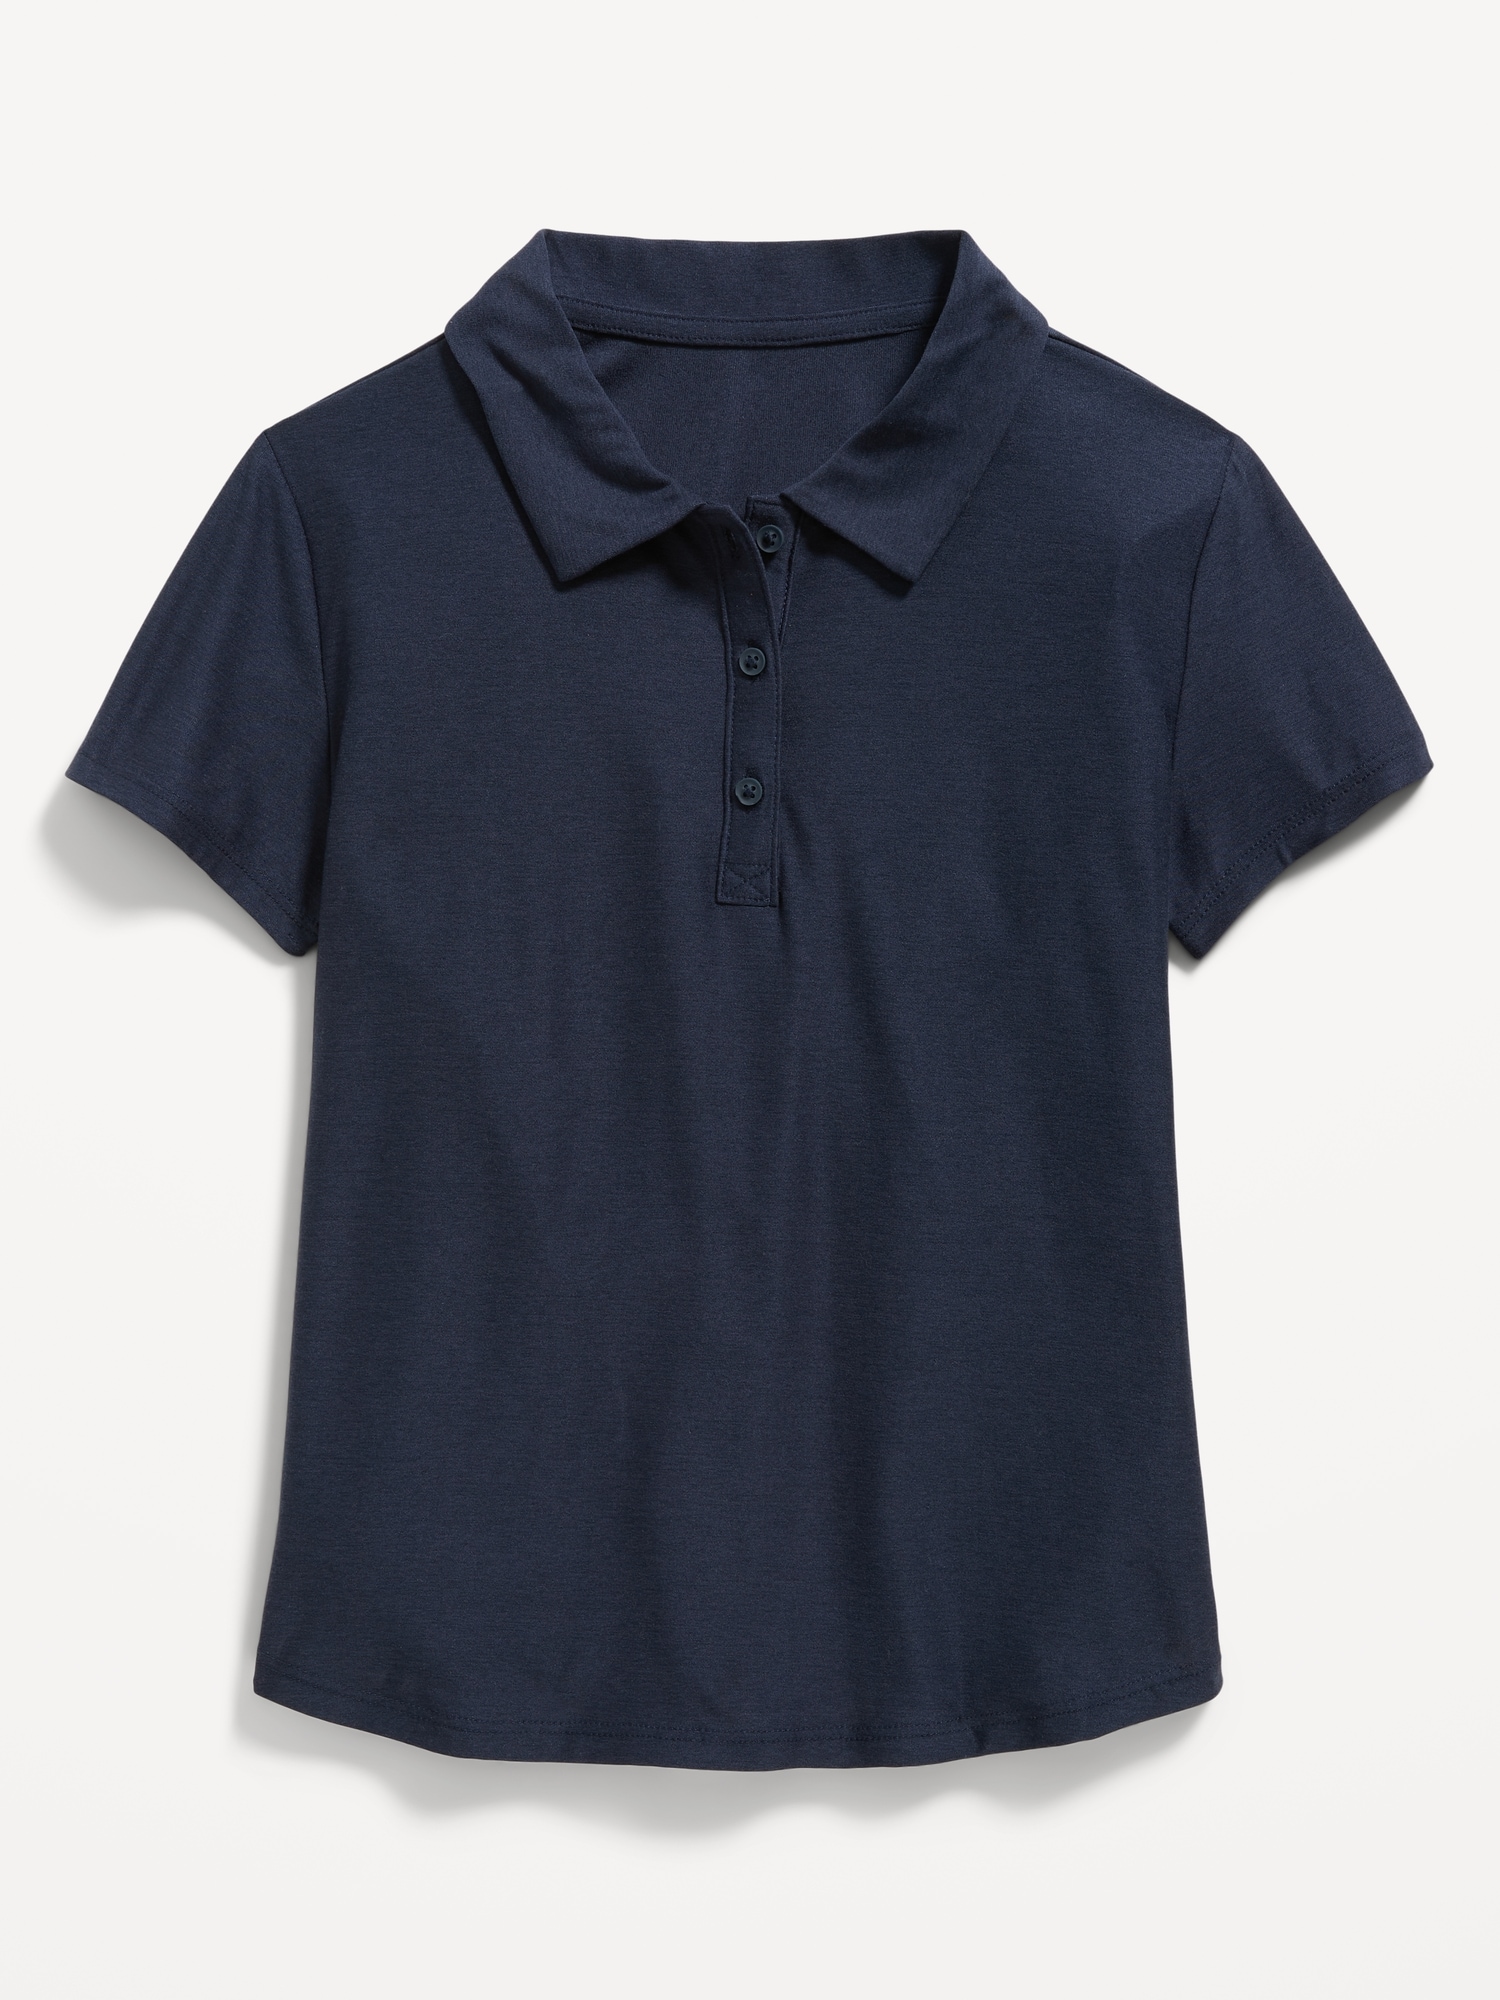 Cloud 94 Soft School Uniform Polo Shirt for Girls